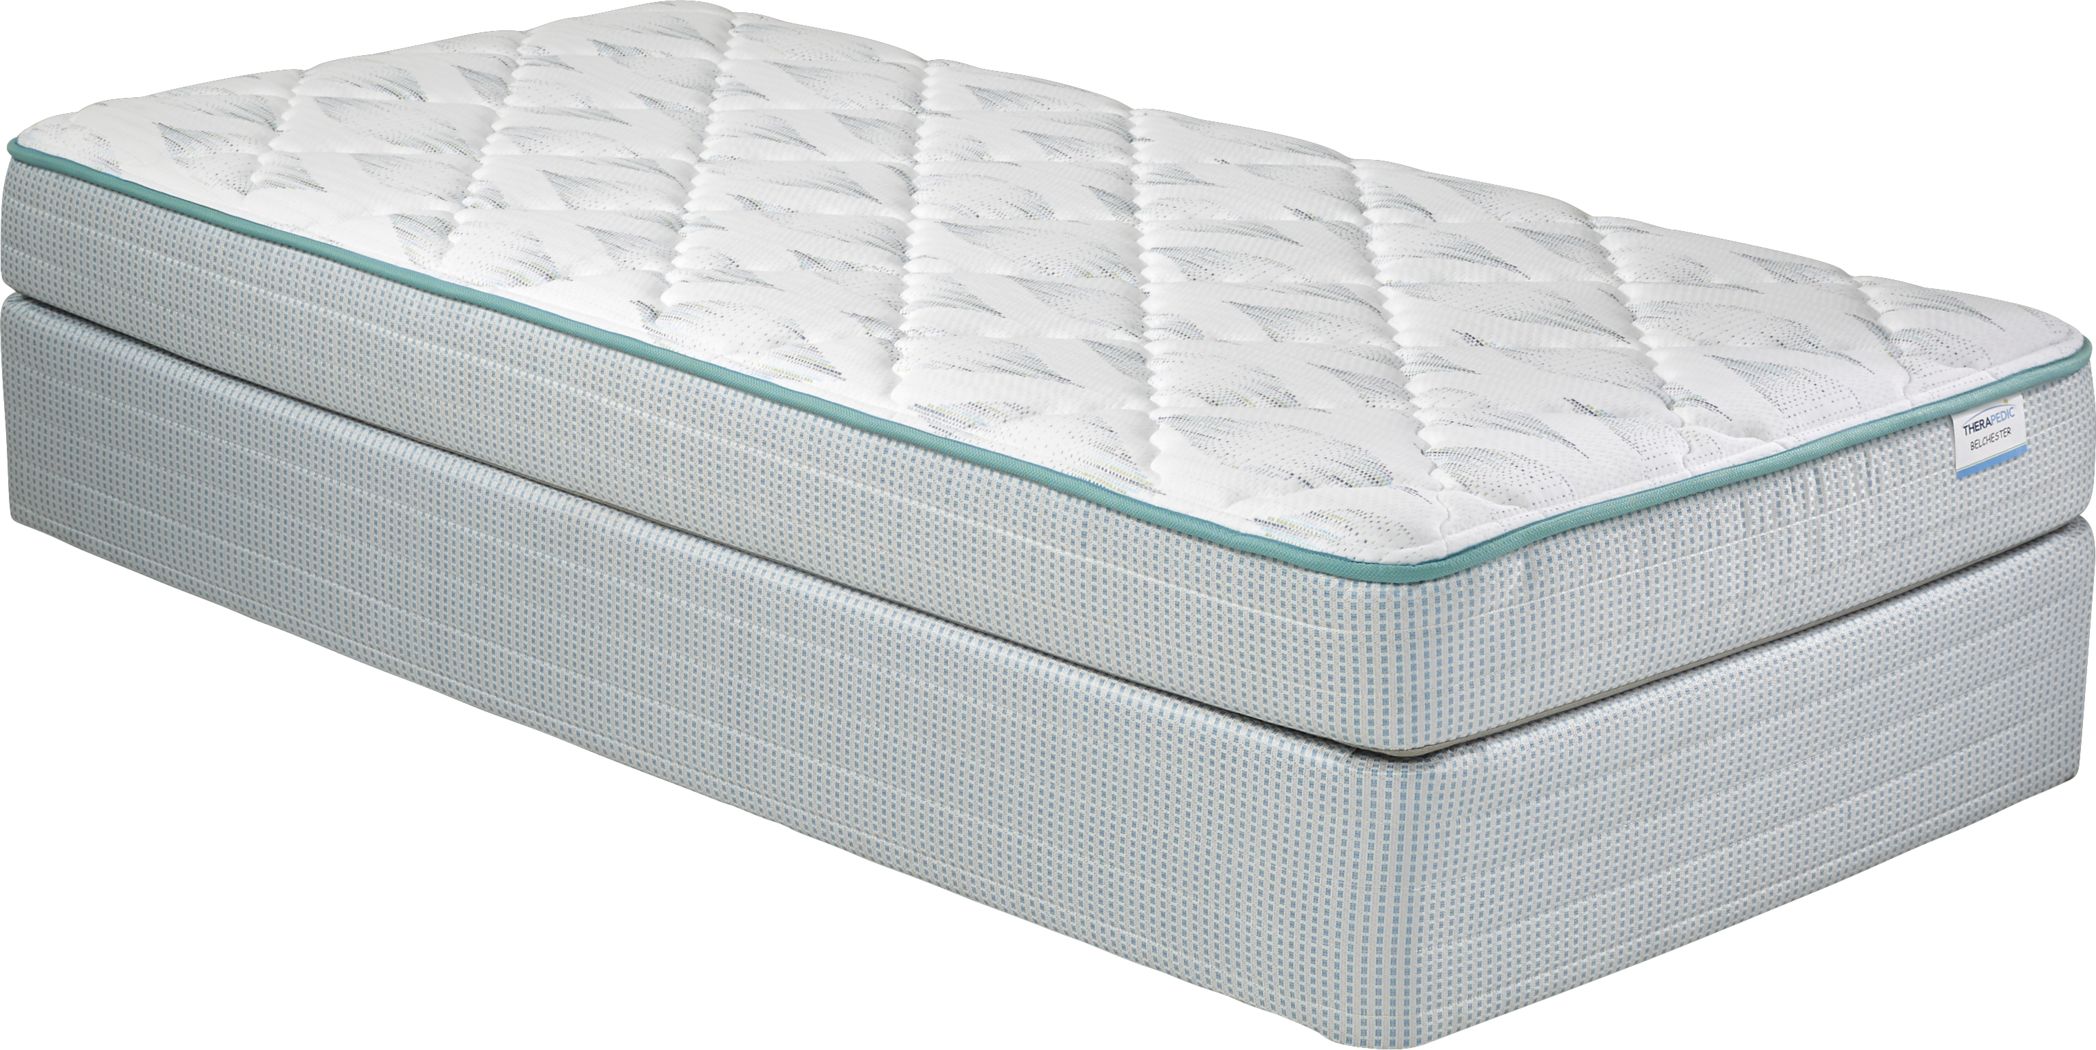 therapedic concord twin mattress